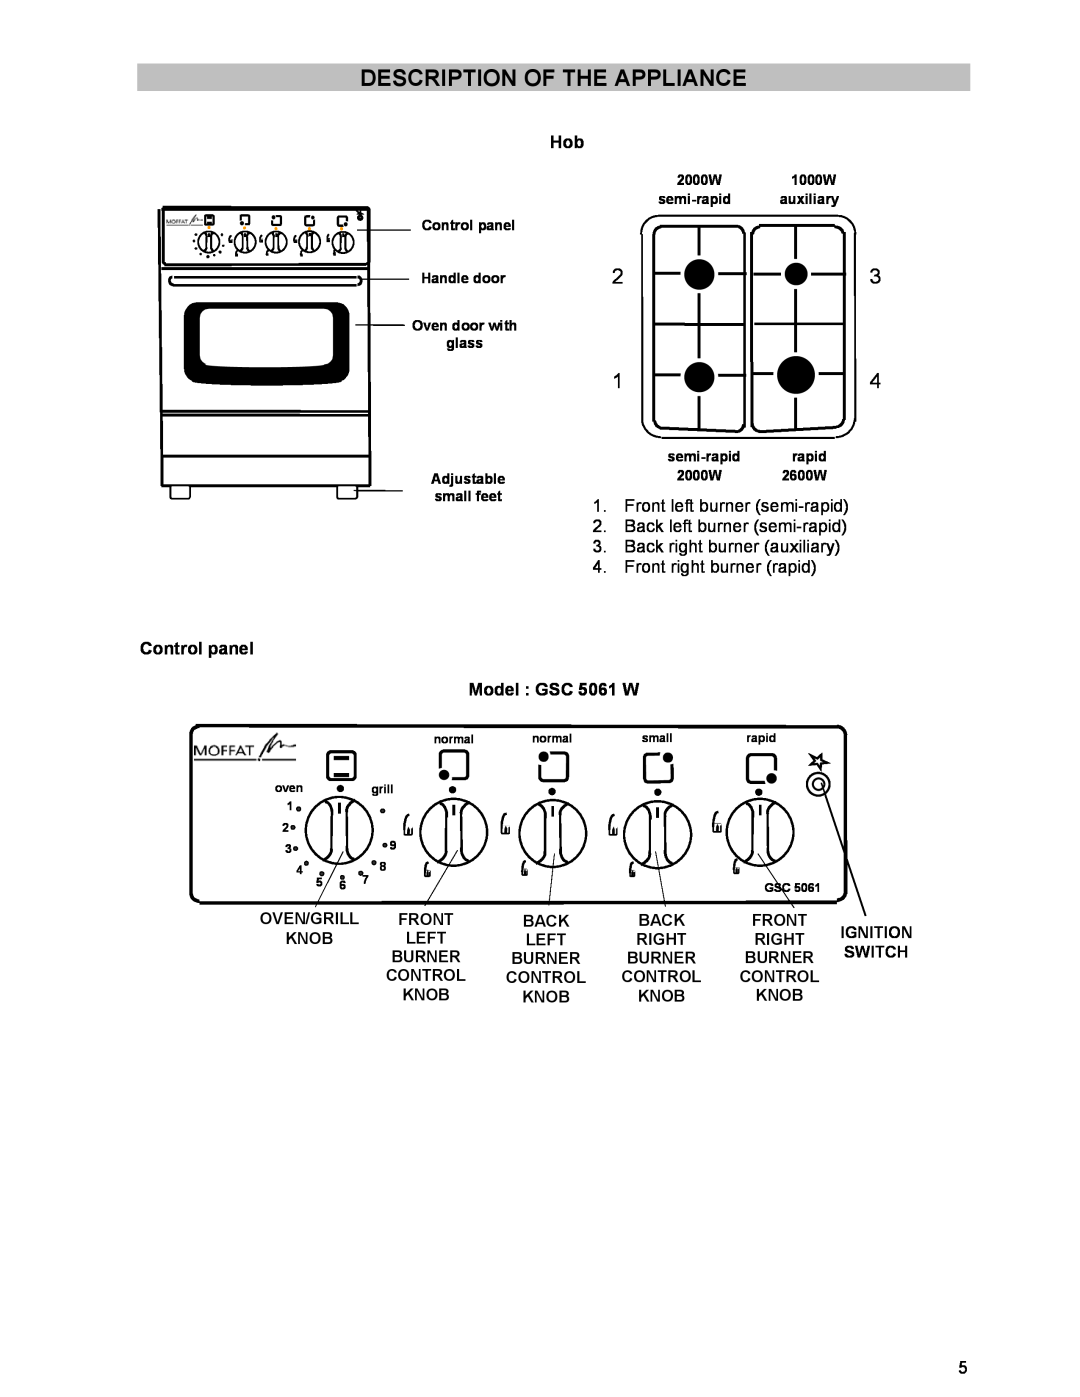 Moffat manual Description Of The Appliance, Control panel, Model GSC 5061 W 